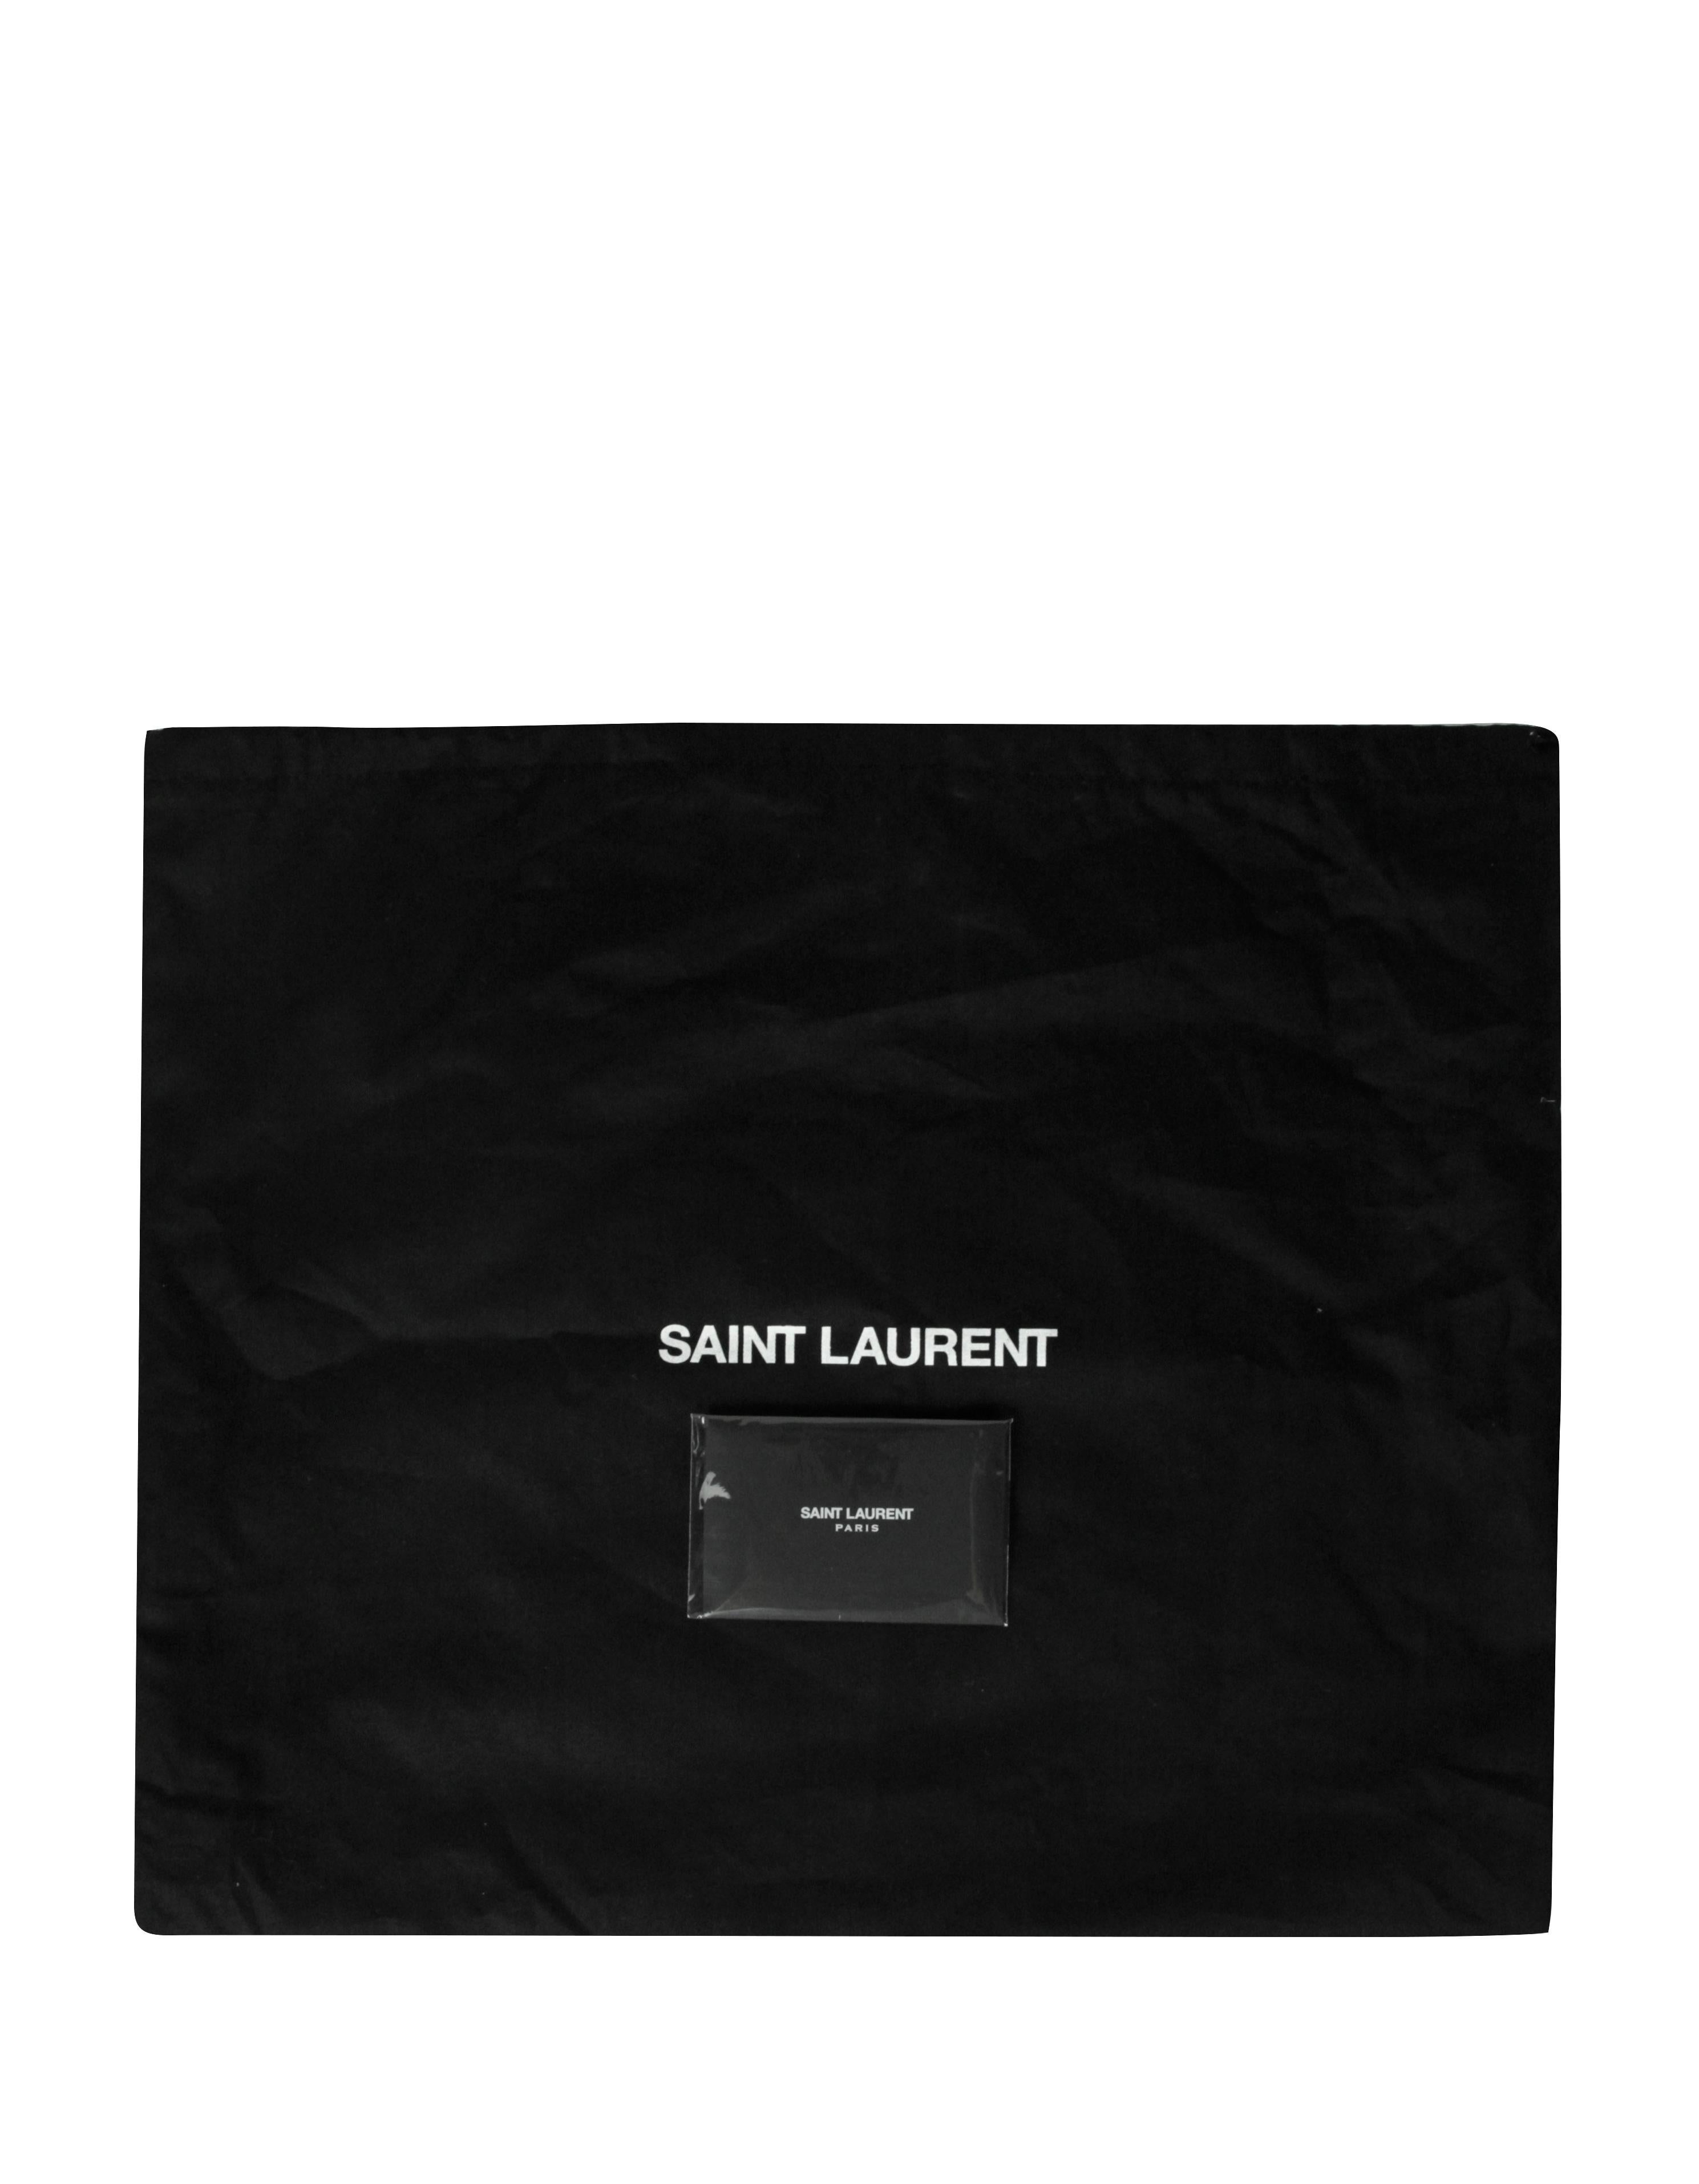 Saint Laurent Lipstick Fuchsia Pink Satin Quilted Large Sade Clutch Bag rt $1590 2